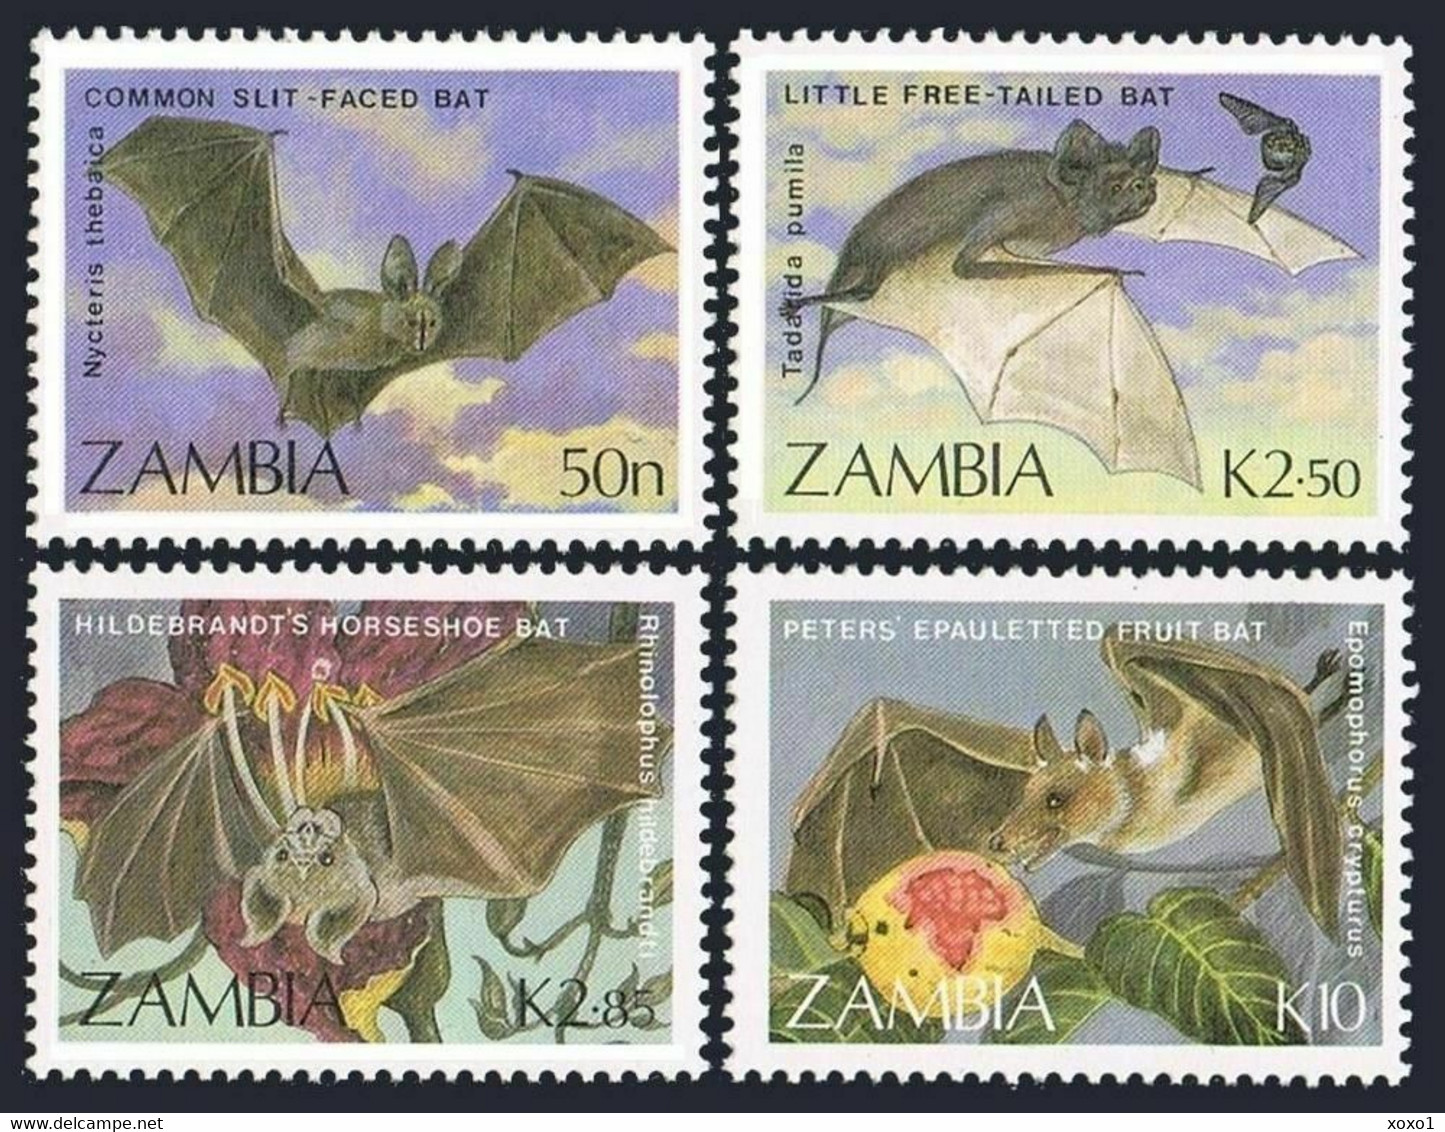 ZAMBIA 1989 MiNr. 474 - 477  Sambia Bats 4v MNH** 6,00 € - Fledermäuse